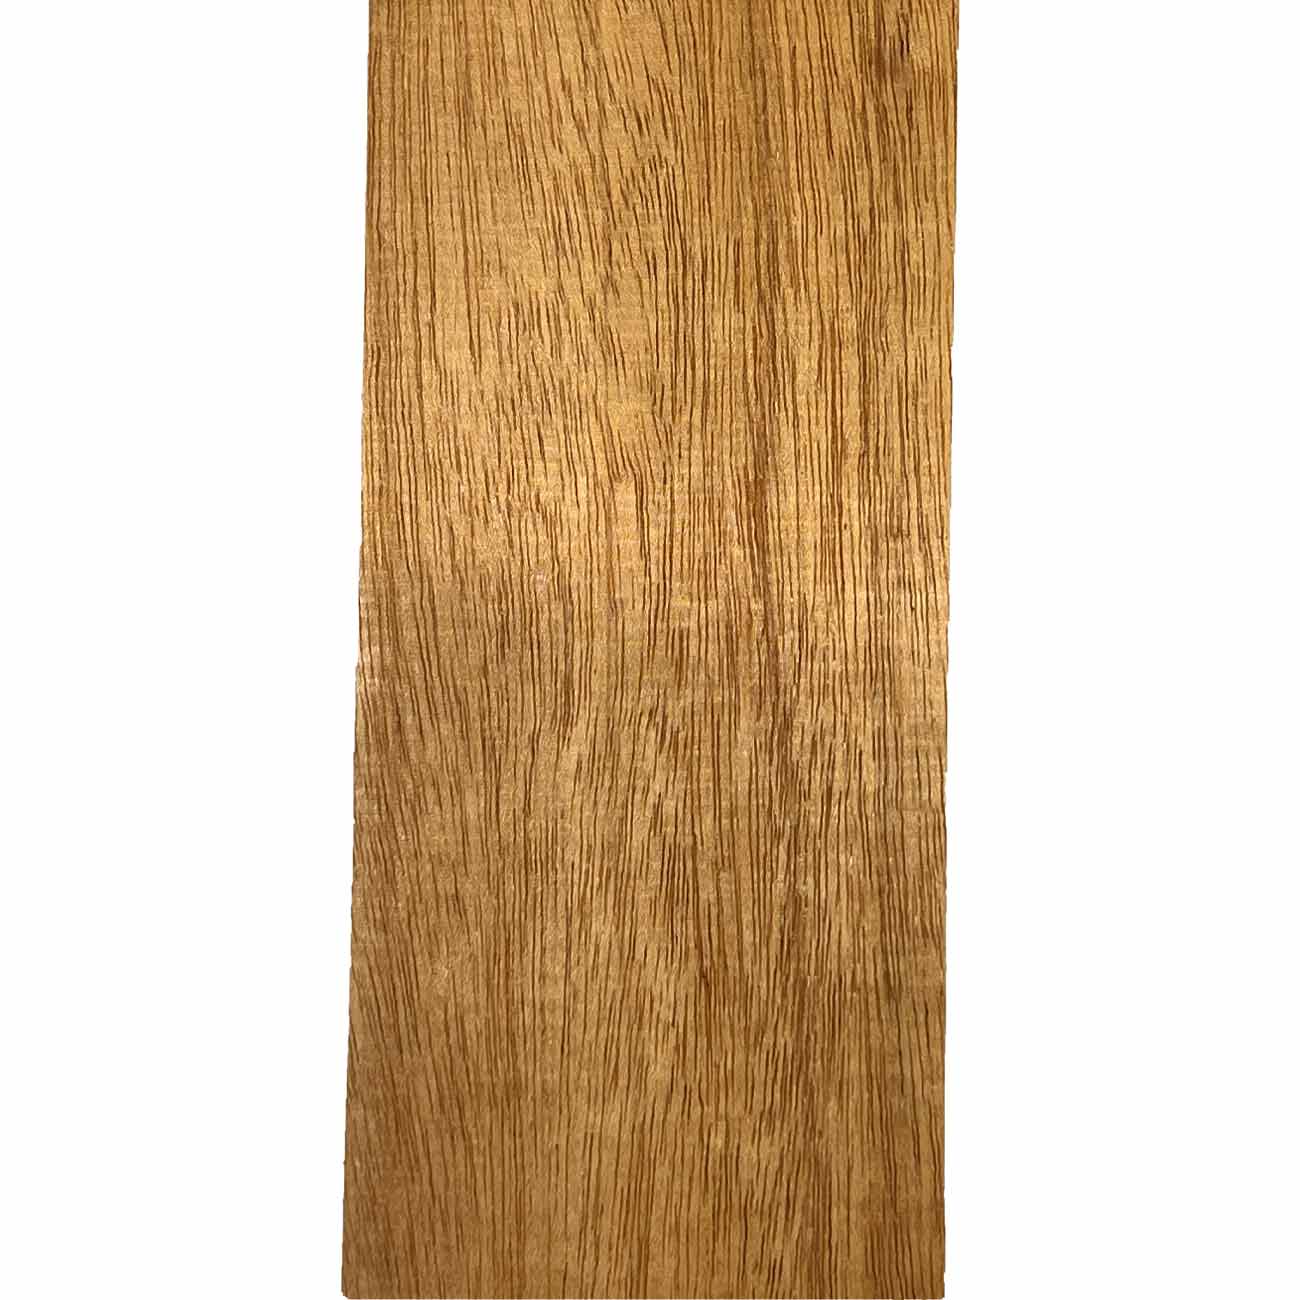 Fijian Mahogany (Swietenia macrophylla) Guitar Fingerboard/Fretboards 21” x 2-3/4” x 3/8” - Exotic Wood Zone - Buy online Across USA 